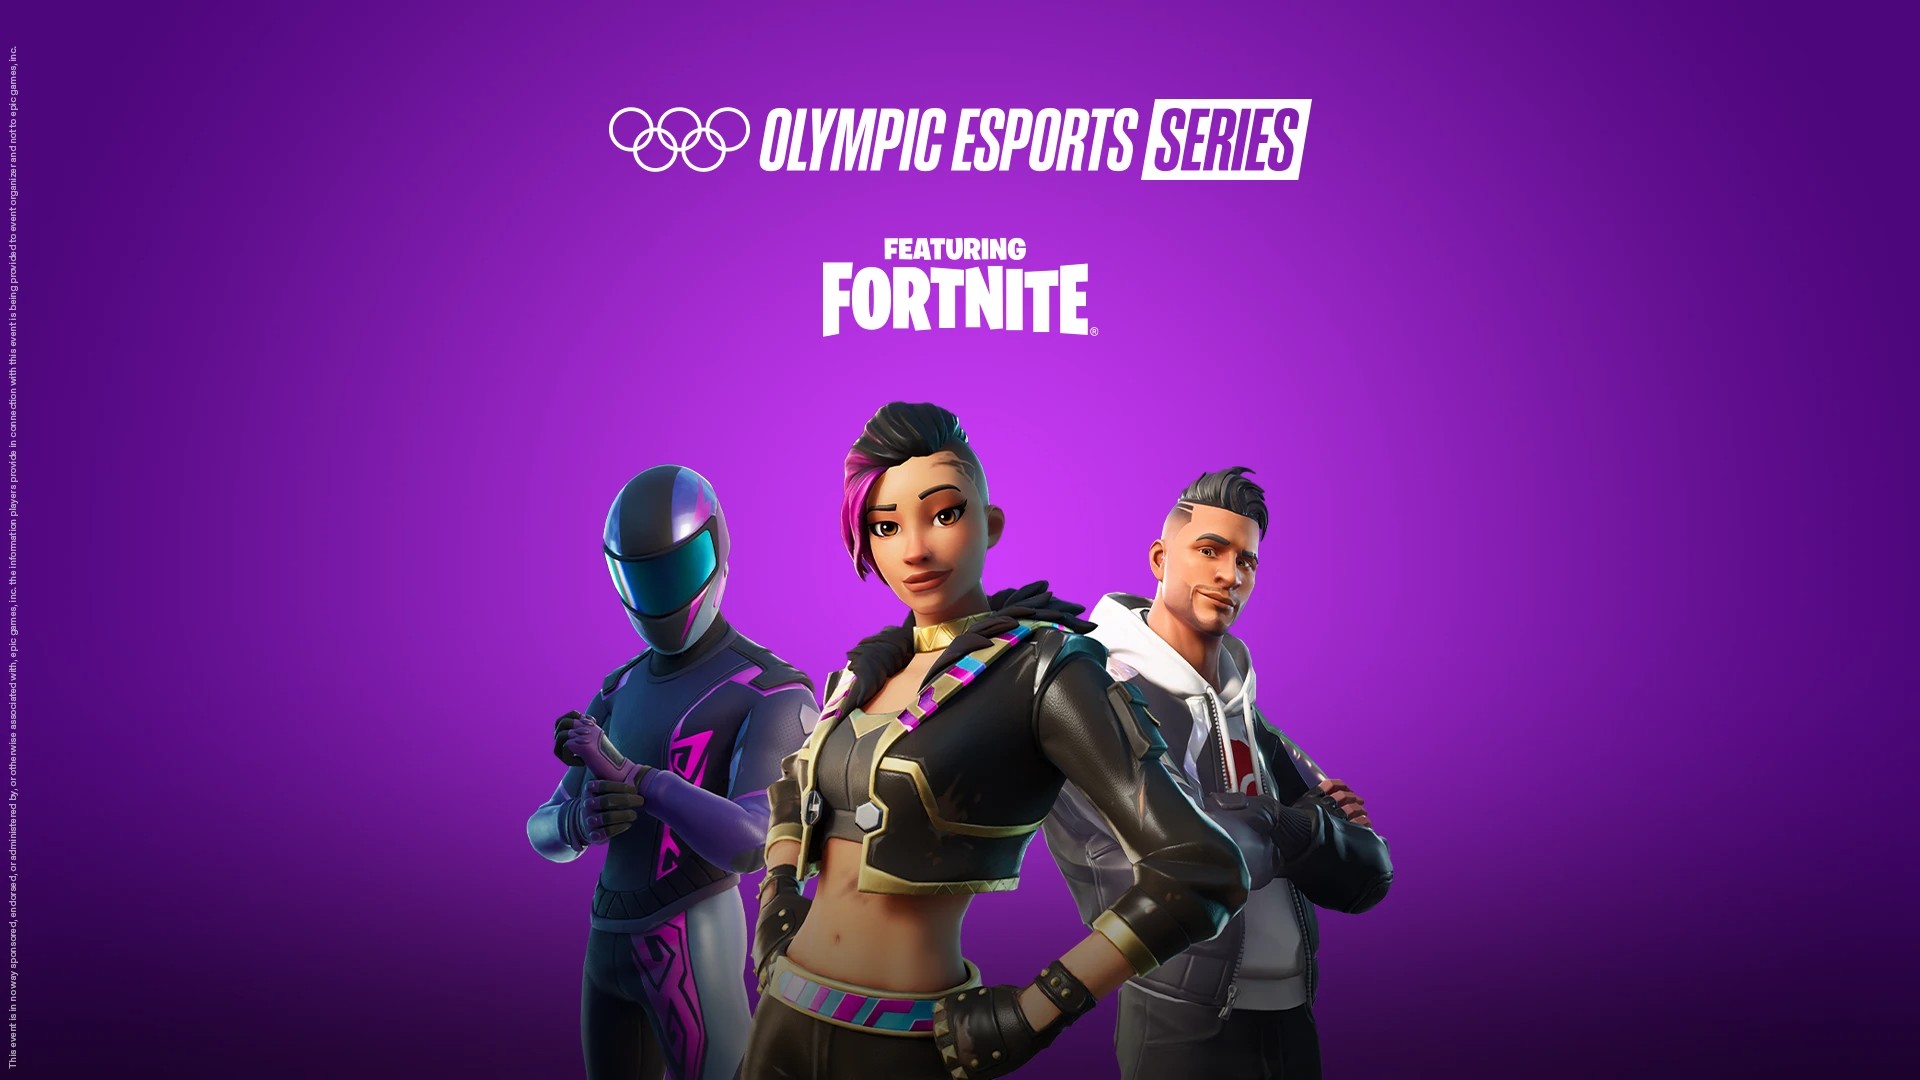 Fortnite jest teraz oficjalnie e-sportem olimpijskim